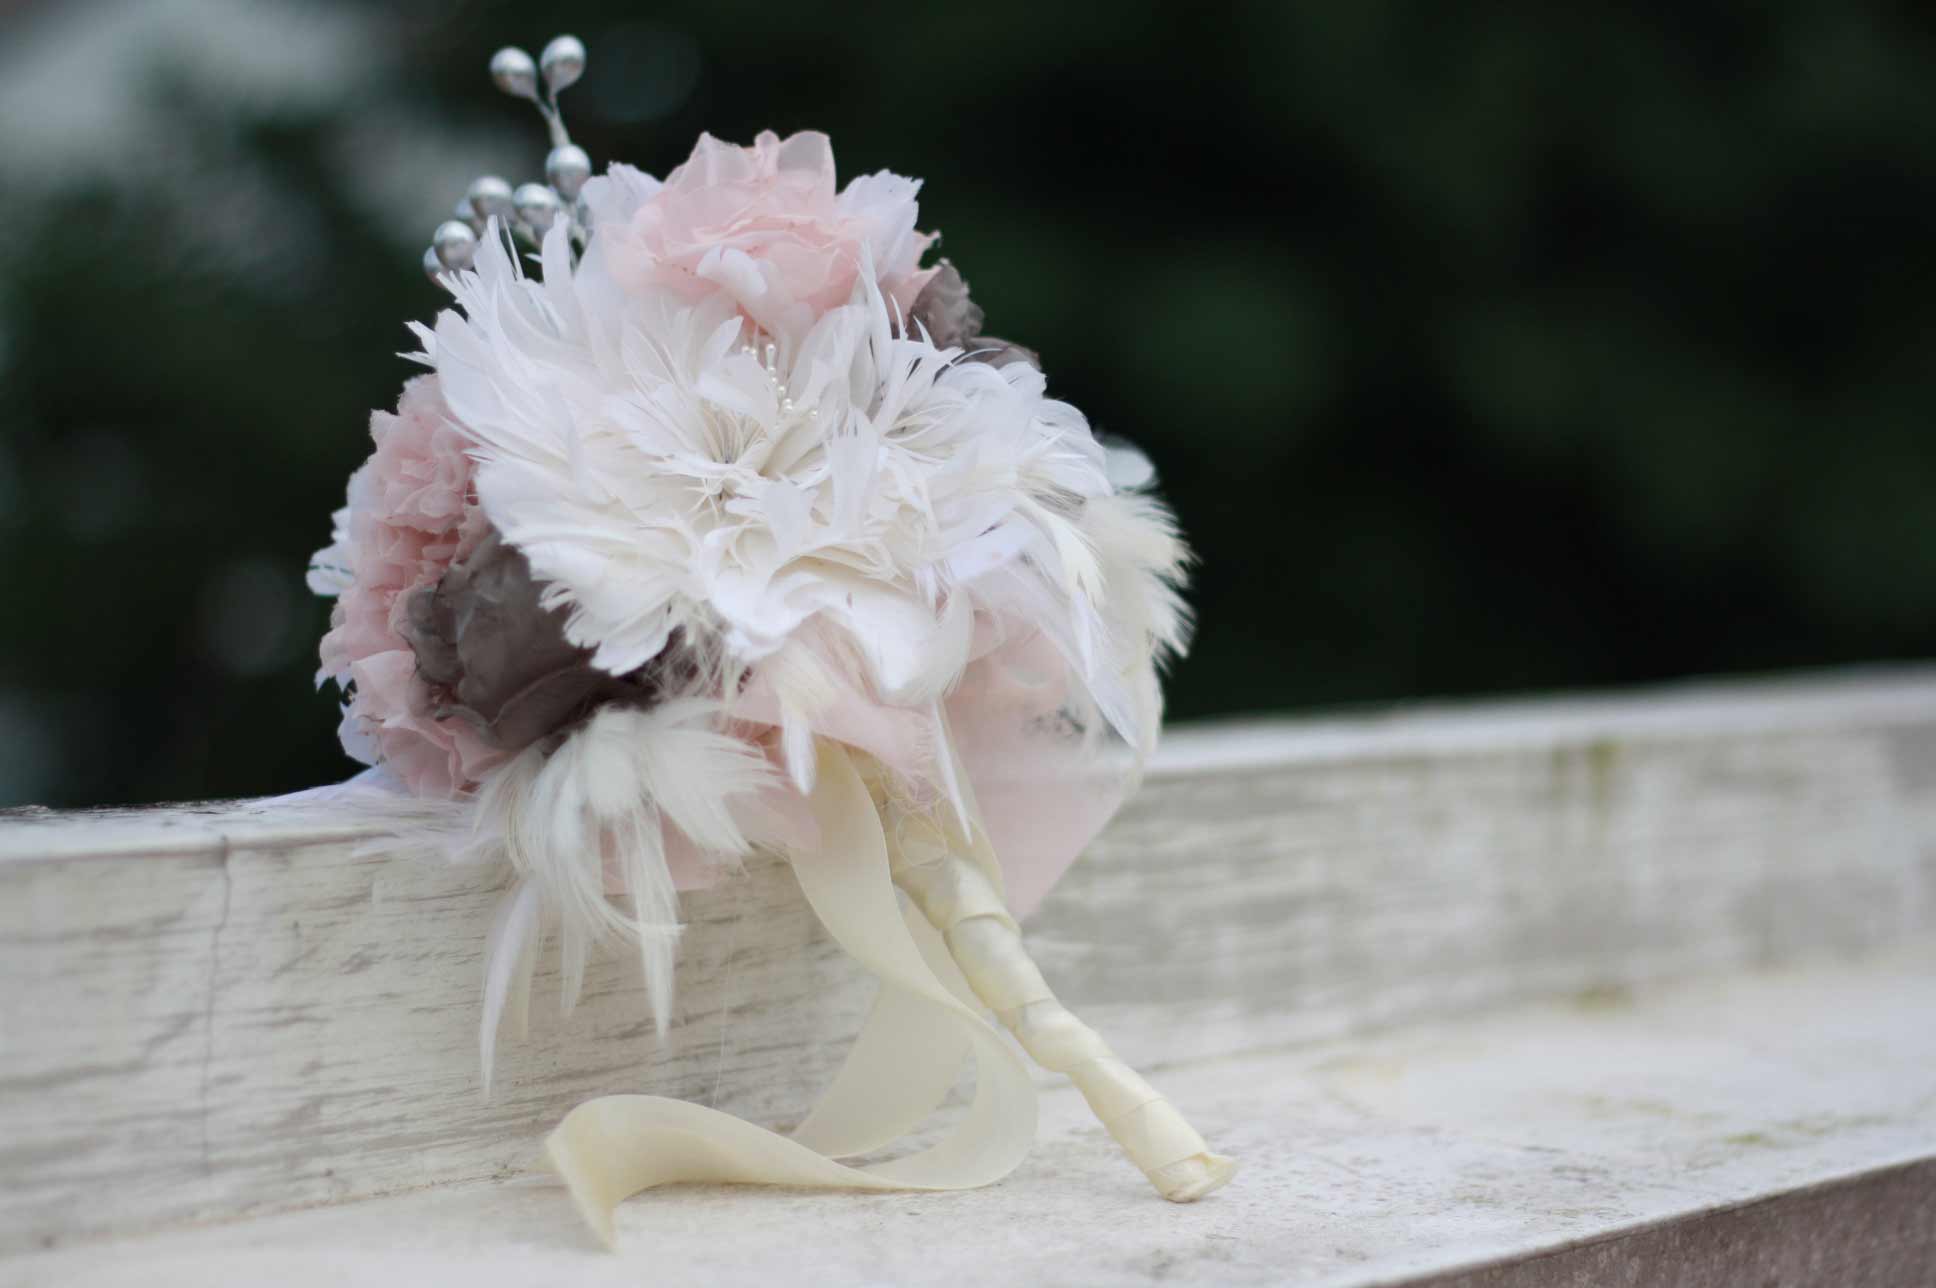 Adorable Handmade Weddin Bouquet Idea Using Fabric Flower & Feathers ; Feather Bouquet Ideas